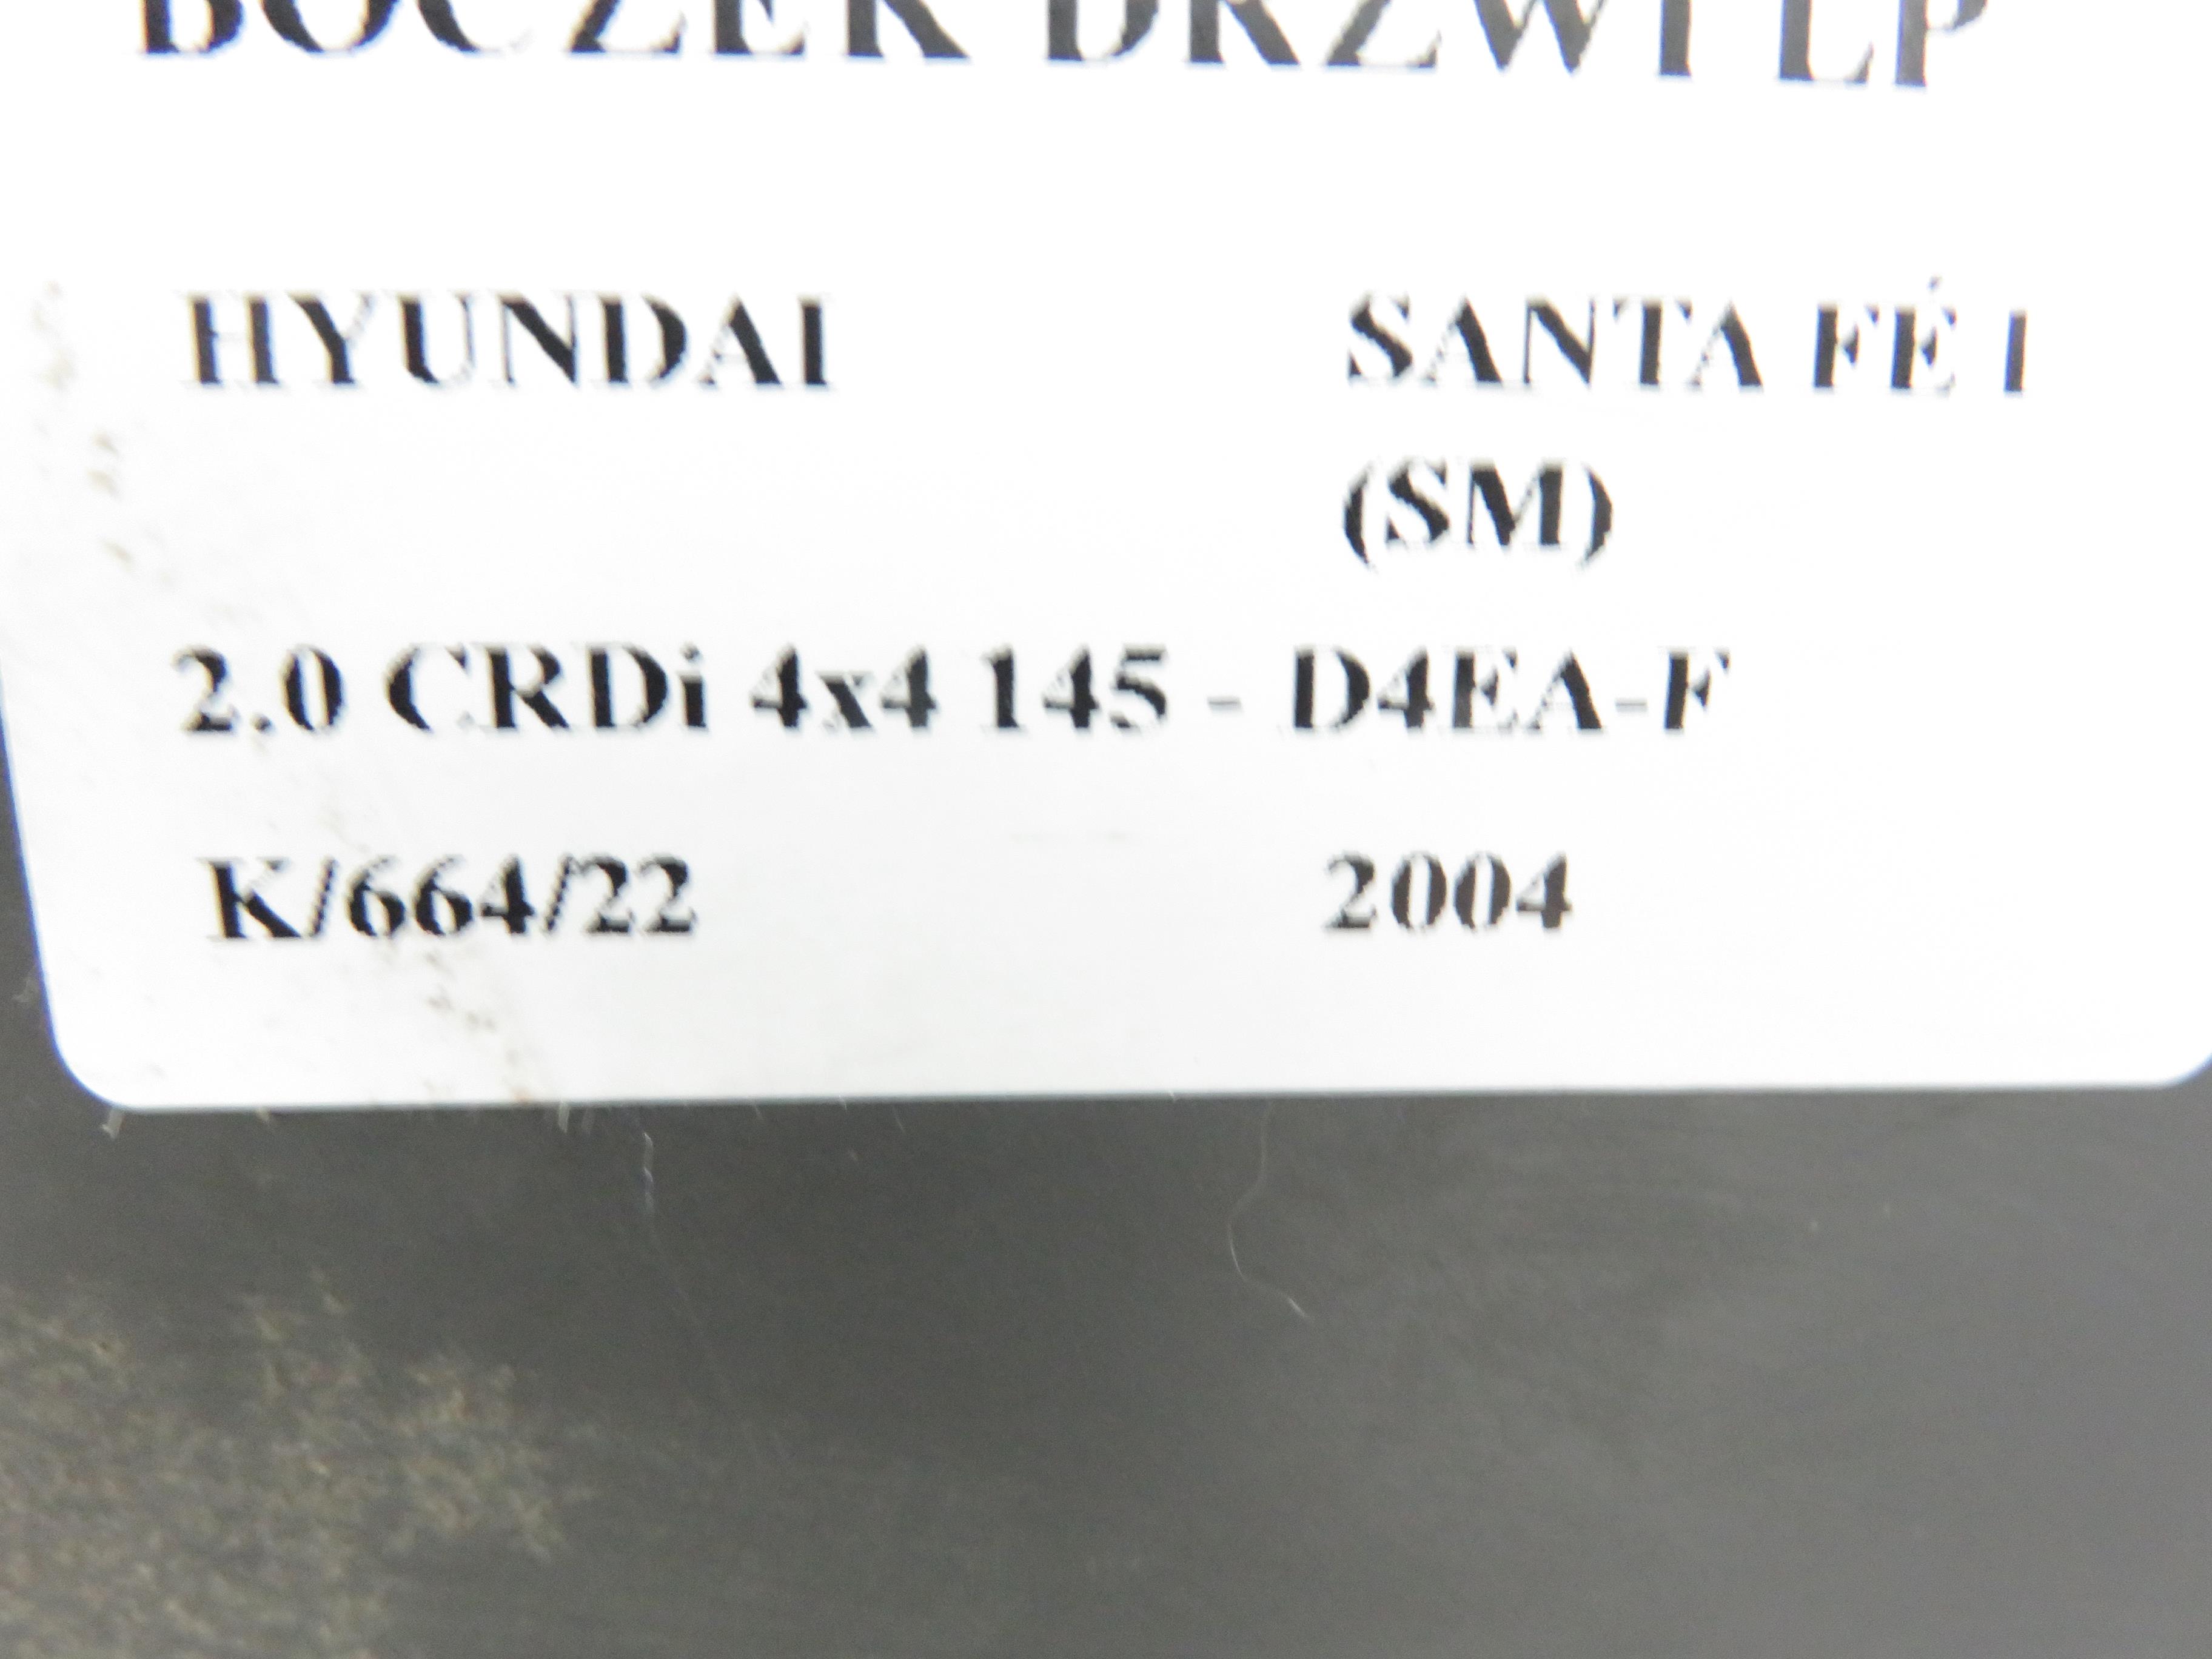 HYUNDAI Santa Fe SM (2000-2013) Sėdyniu komplektas 22039537